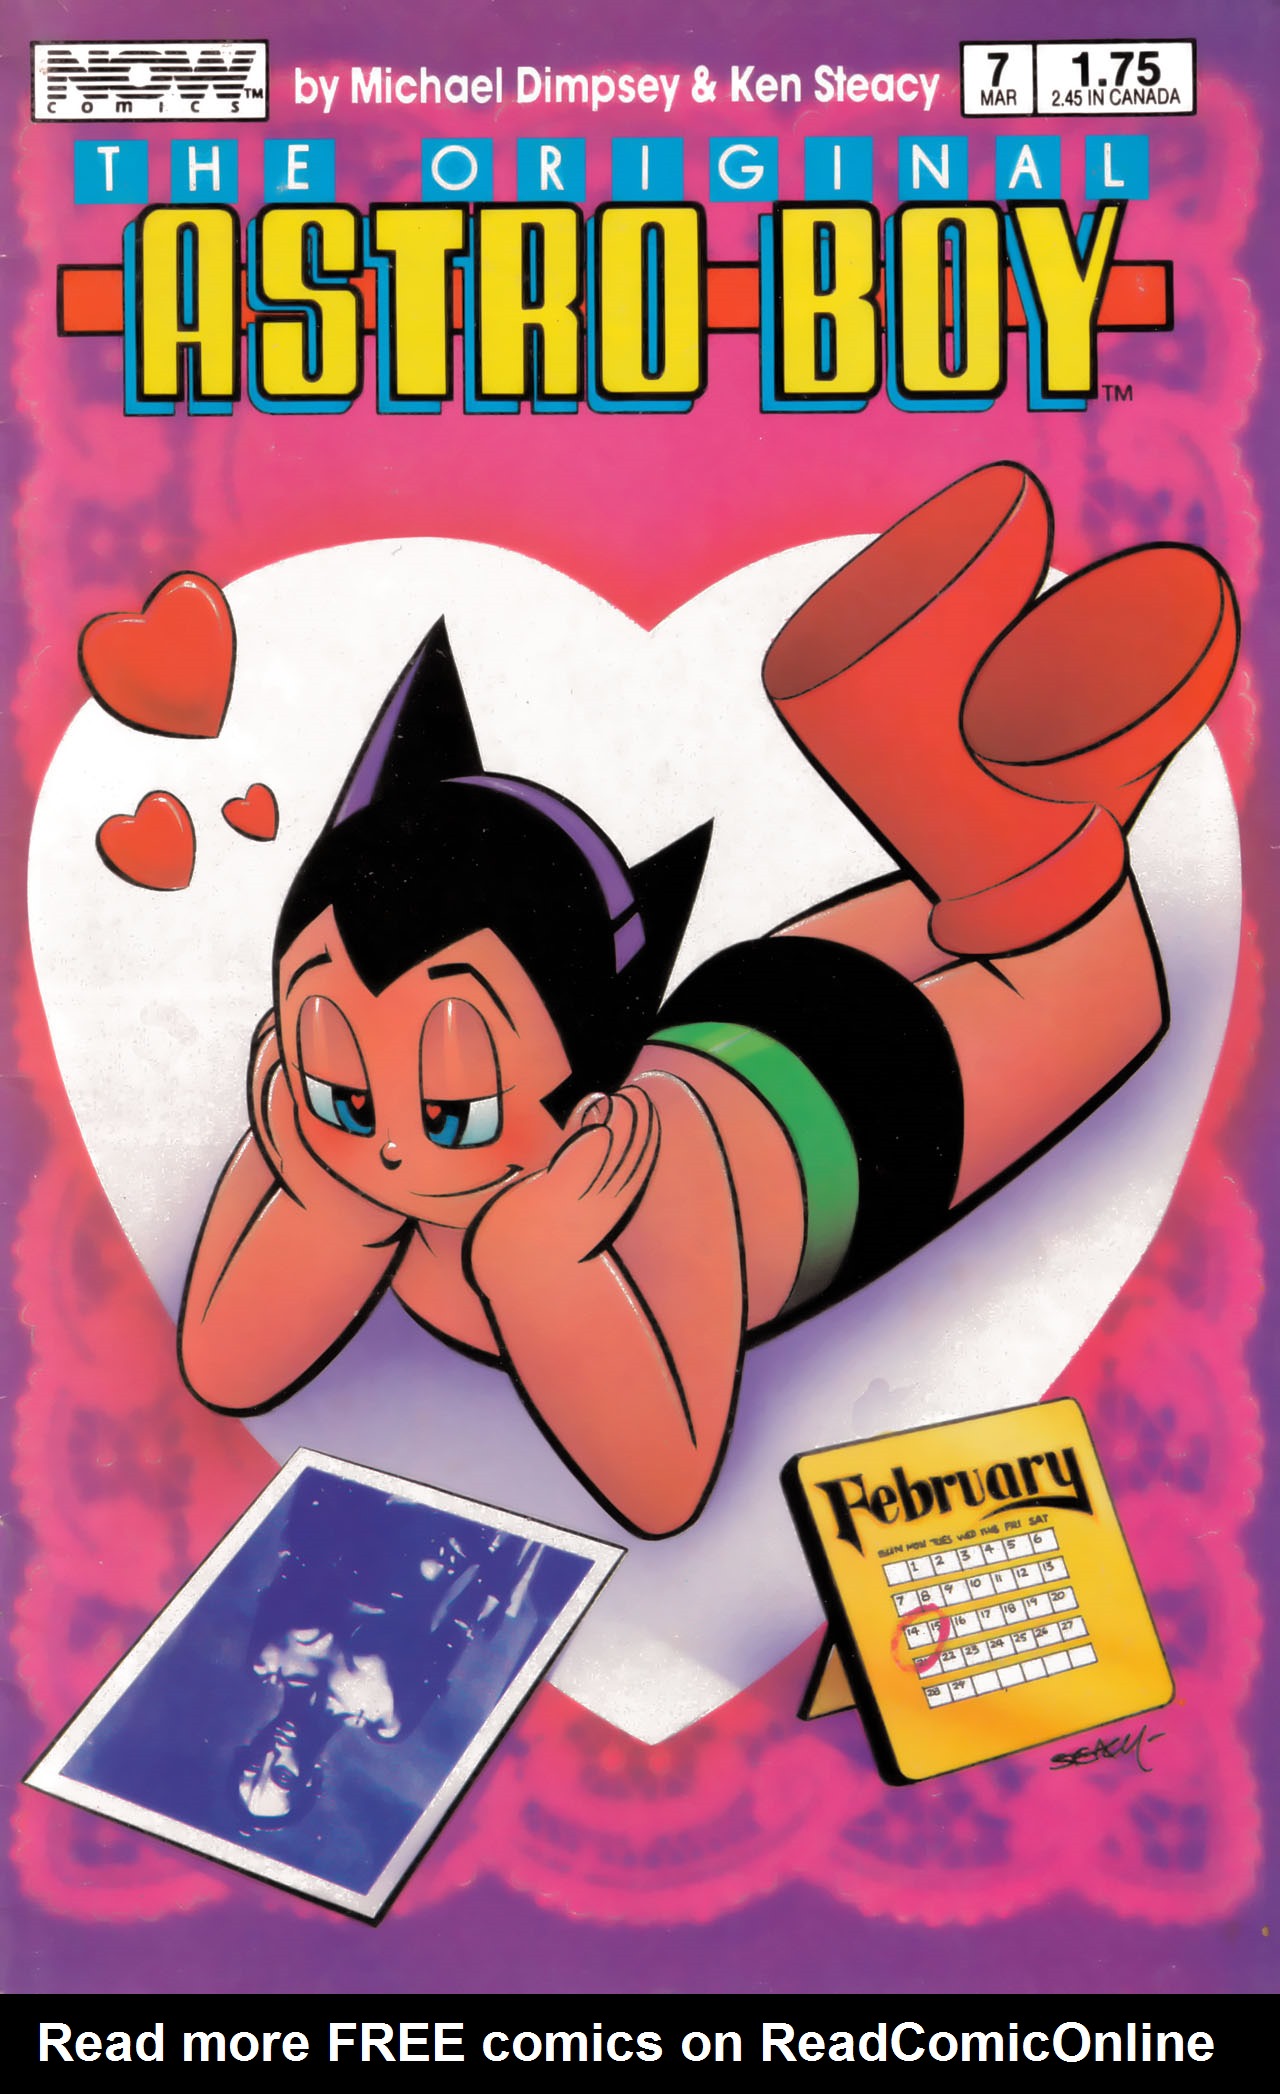 Astro boy porn comic